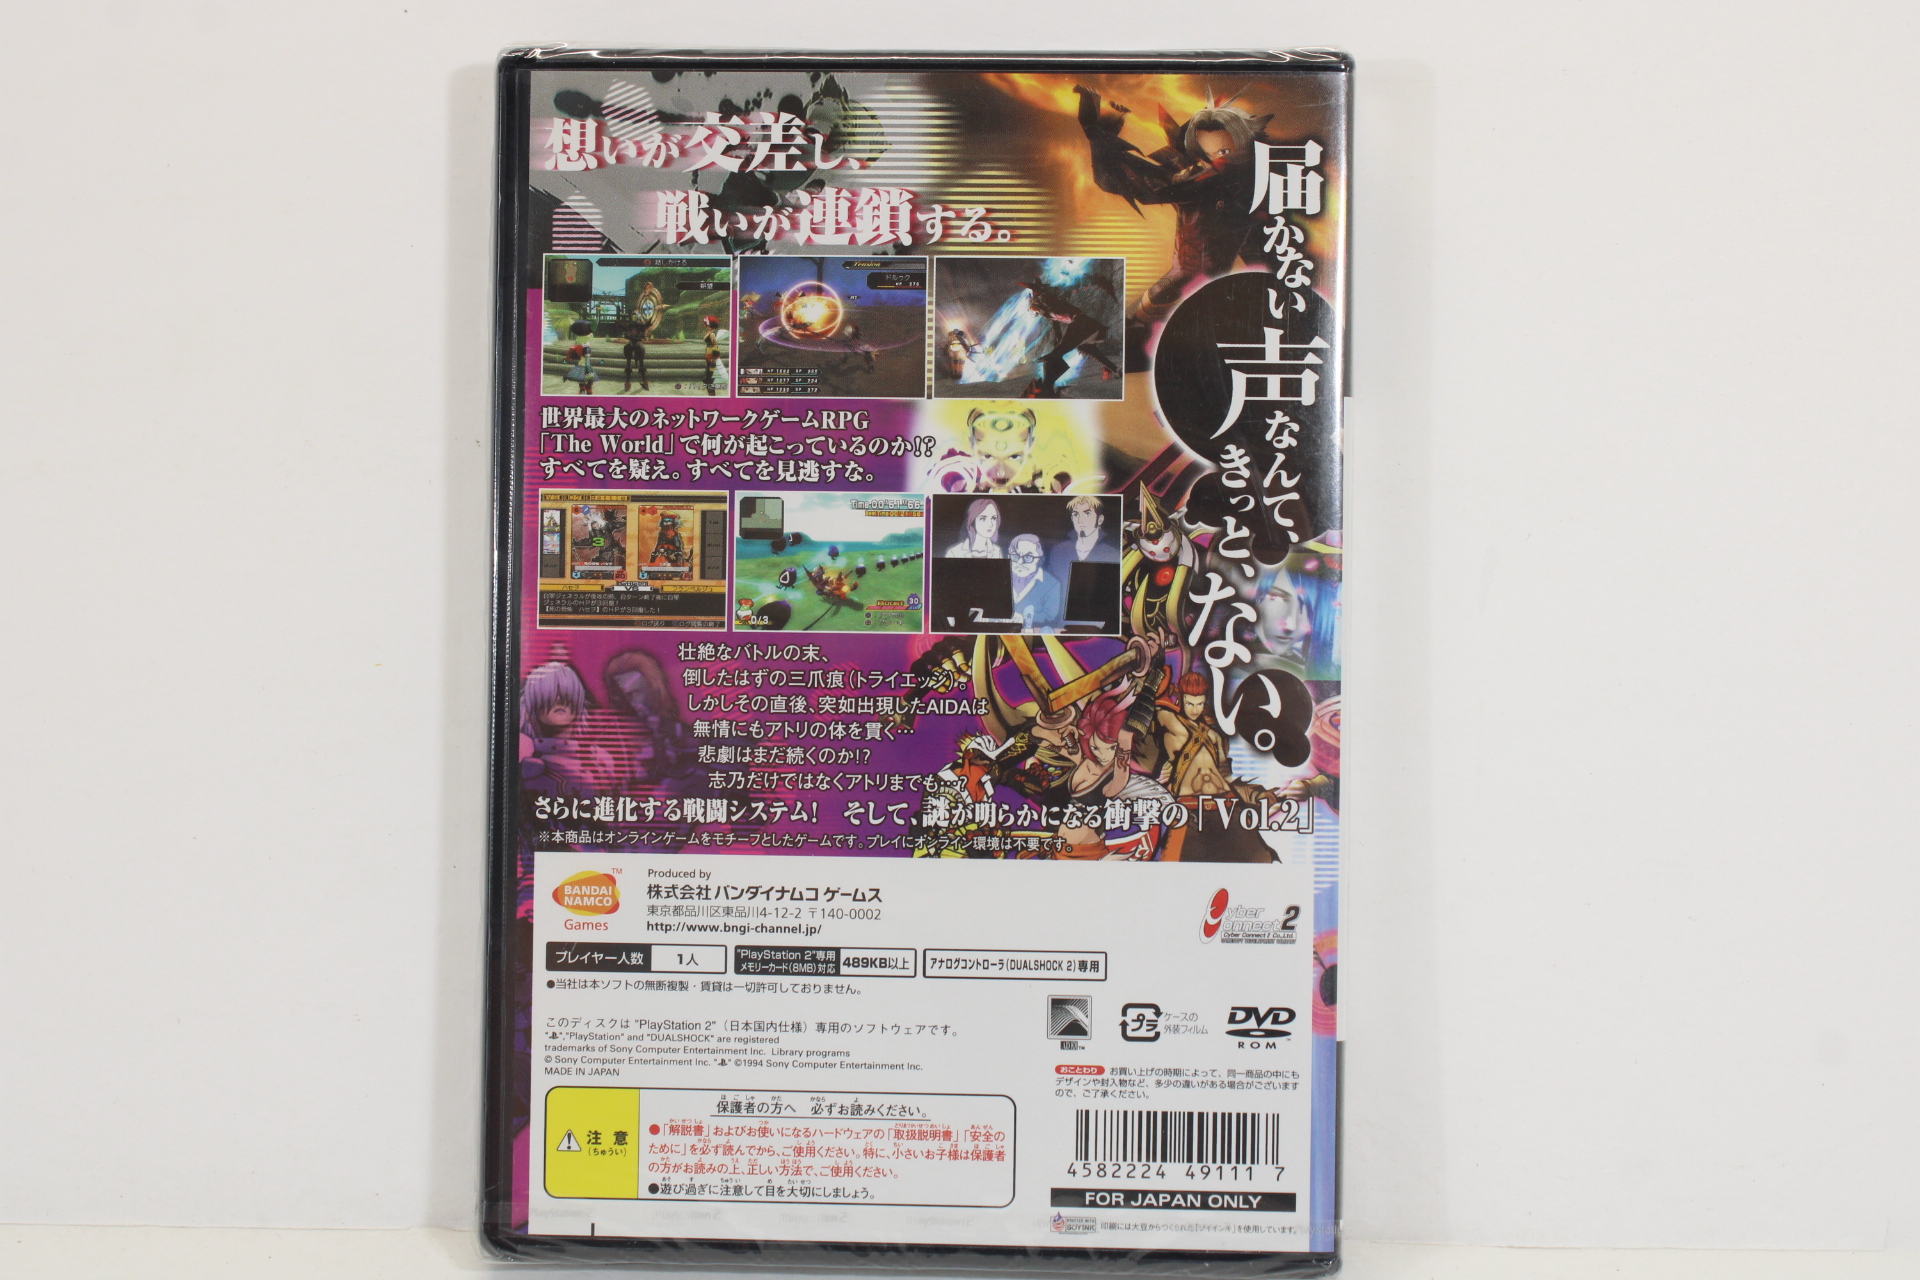 Jogo PS2 Hack Vol 1 X Vol 2 Playstation 2 The Best (Japones